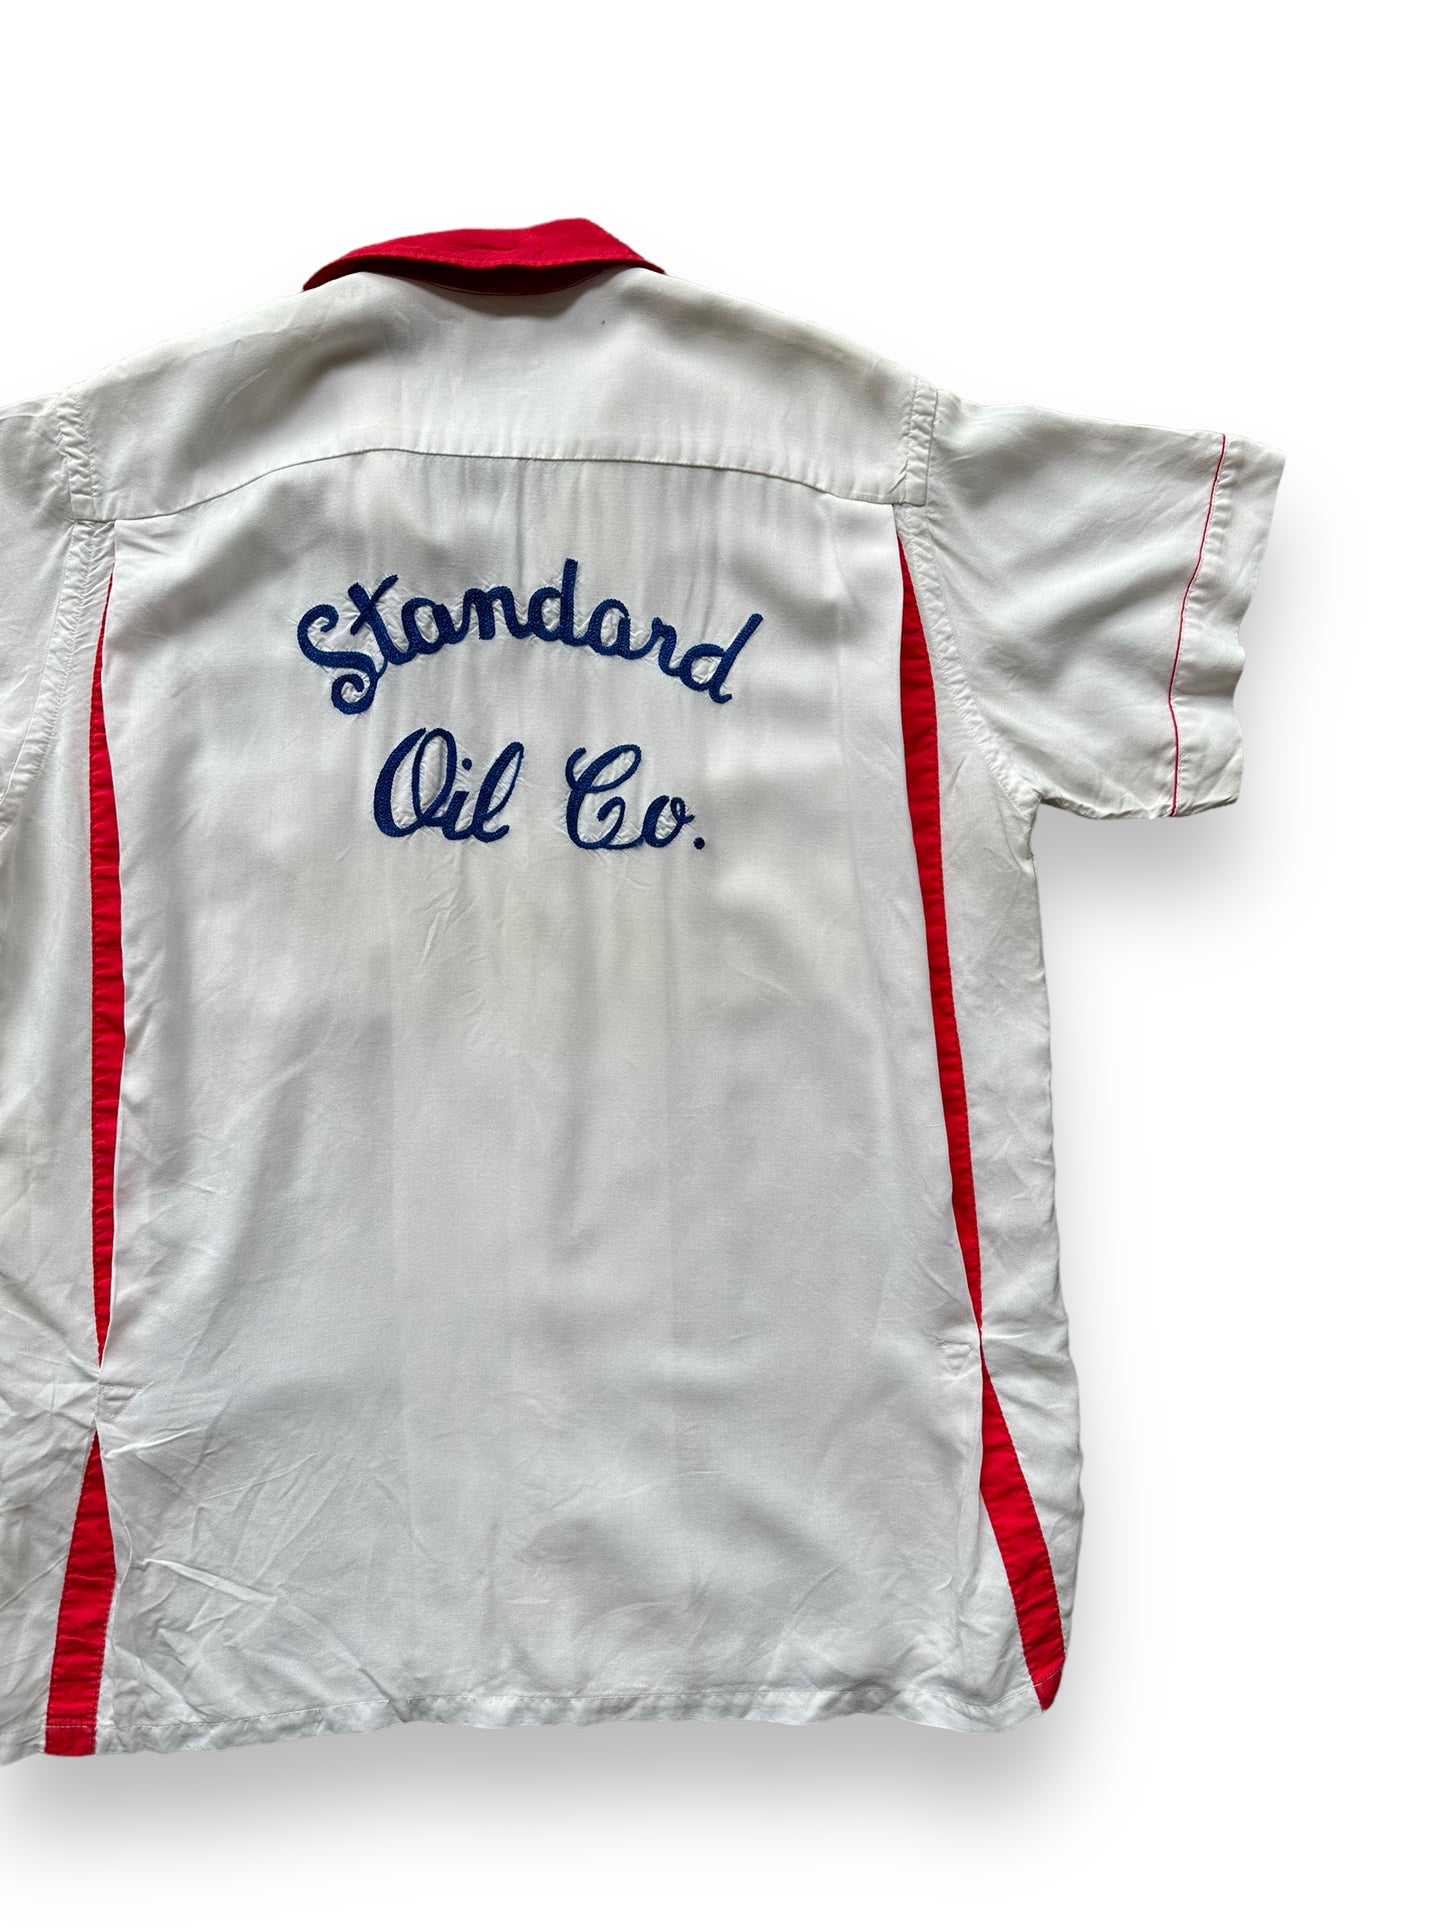 Back right of Vintage "Standard Oil Co." Chainstitched Bowling Shirt SZ M | Vintage Bowling Shirt Seattle | Barn Owl Vintage Seattle